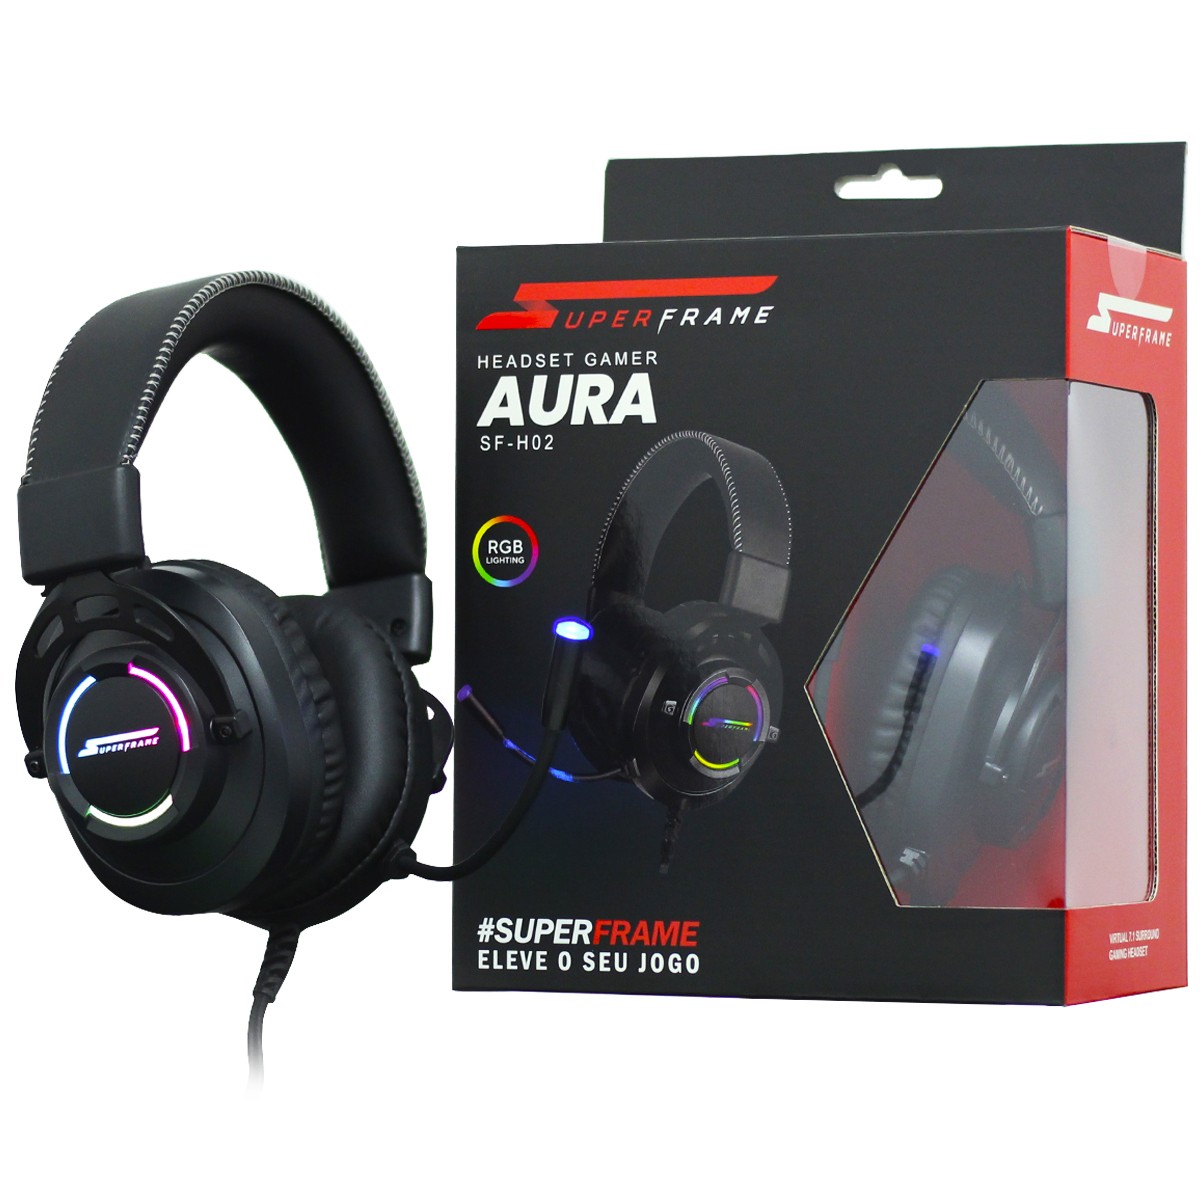 Headset Gamer SuperFrame AURA, 7.1 Surround, RGB, USB, Black